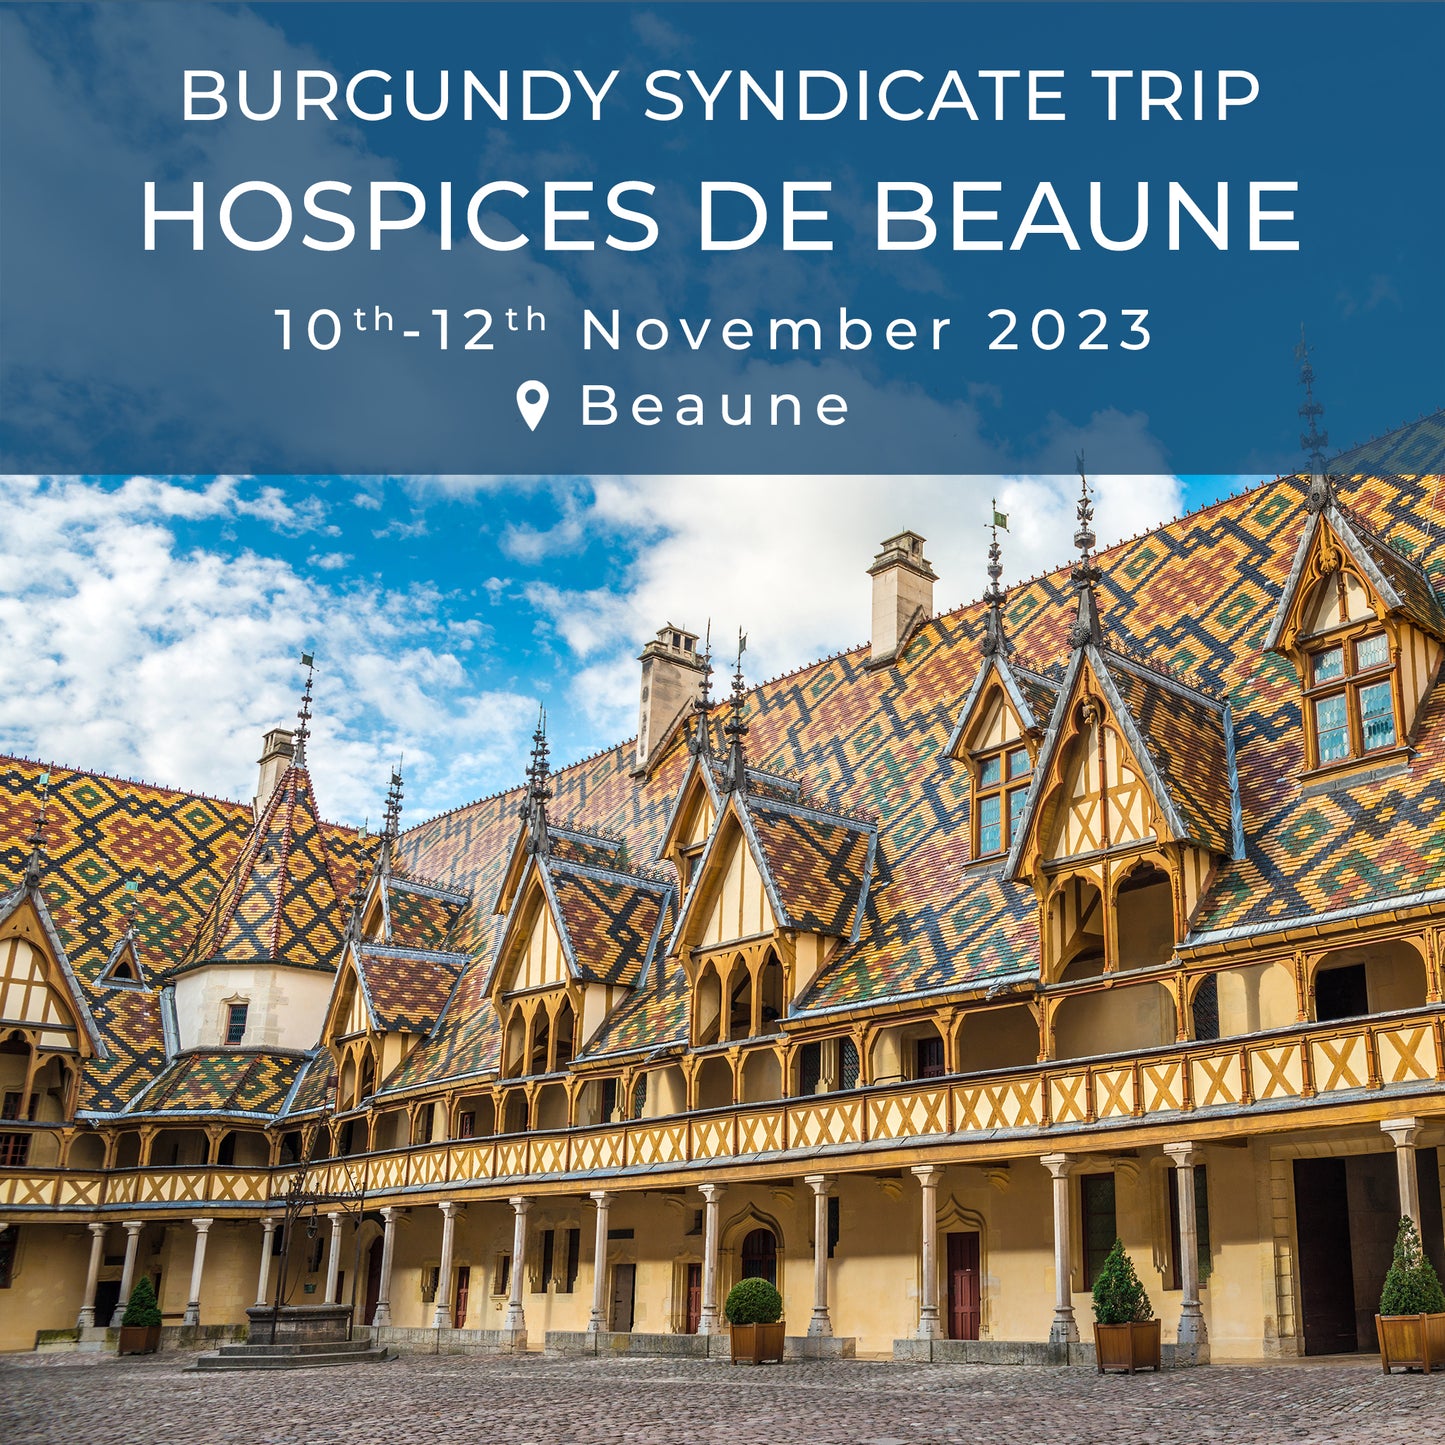 Burgundy Syndicate Trip: Hospices de Beaune